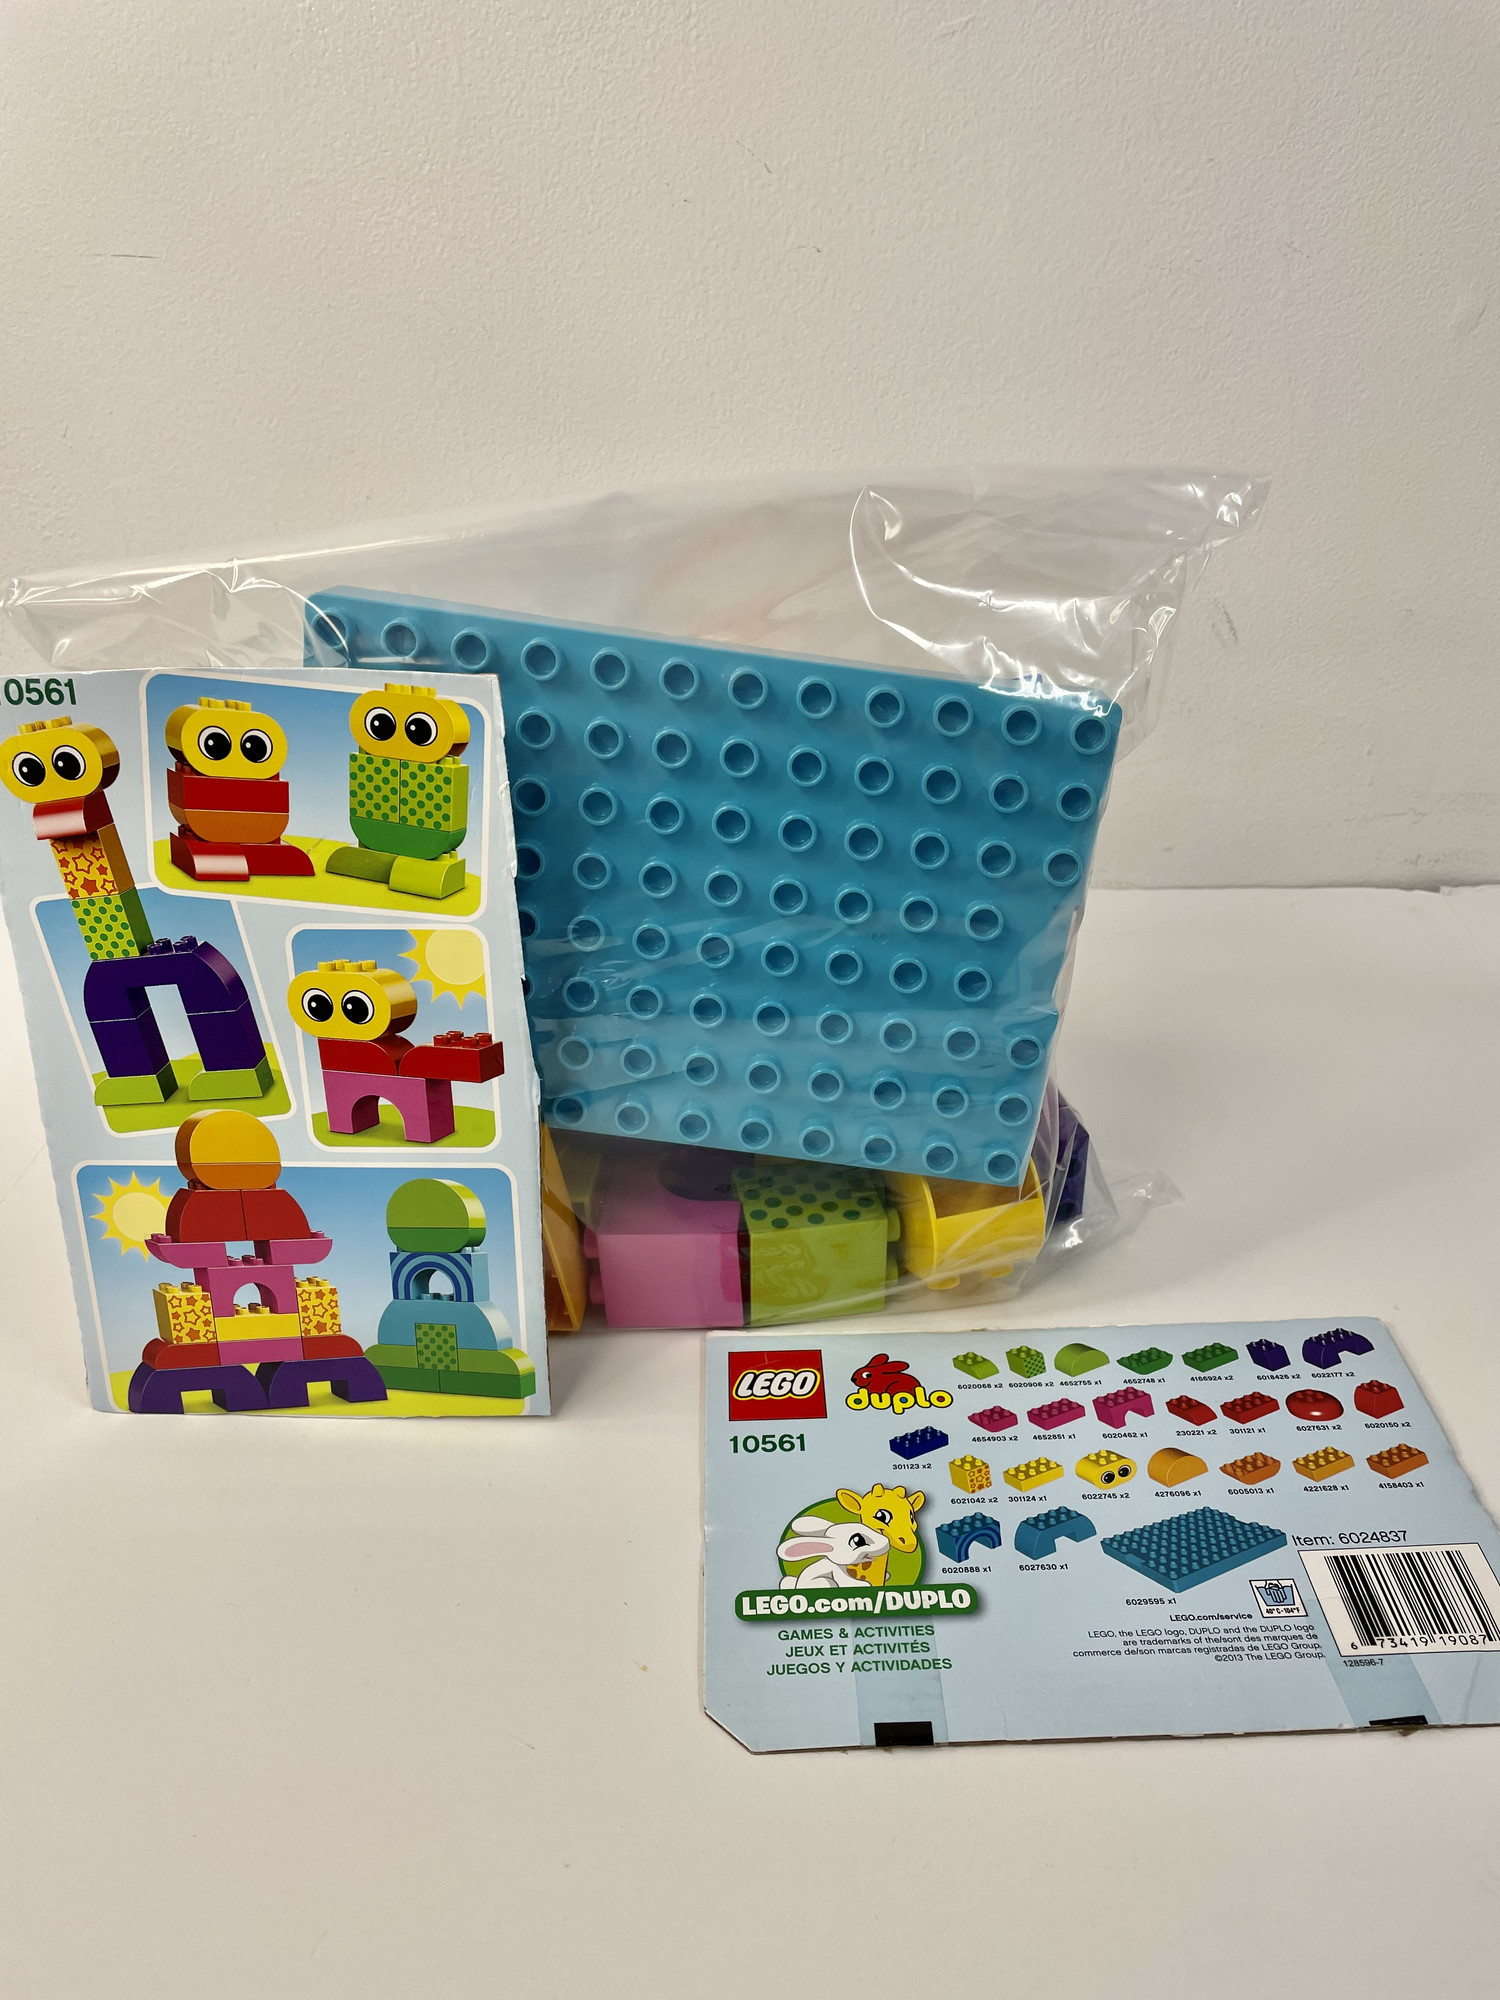 LEGO Duplo Set, #10561, Size: Complete